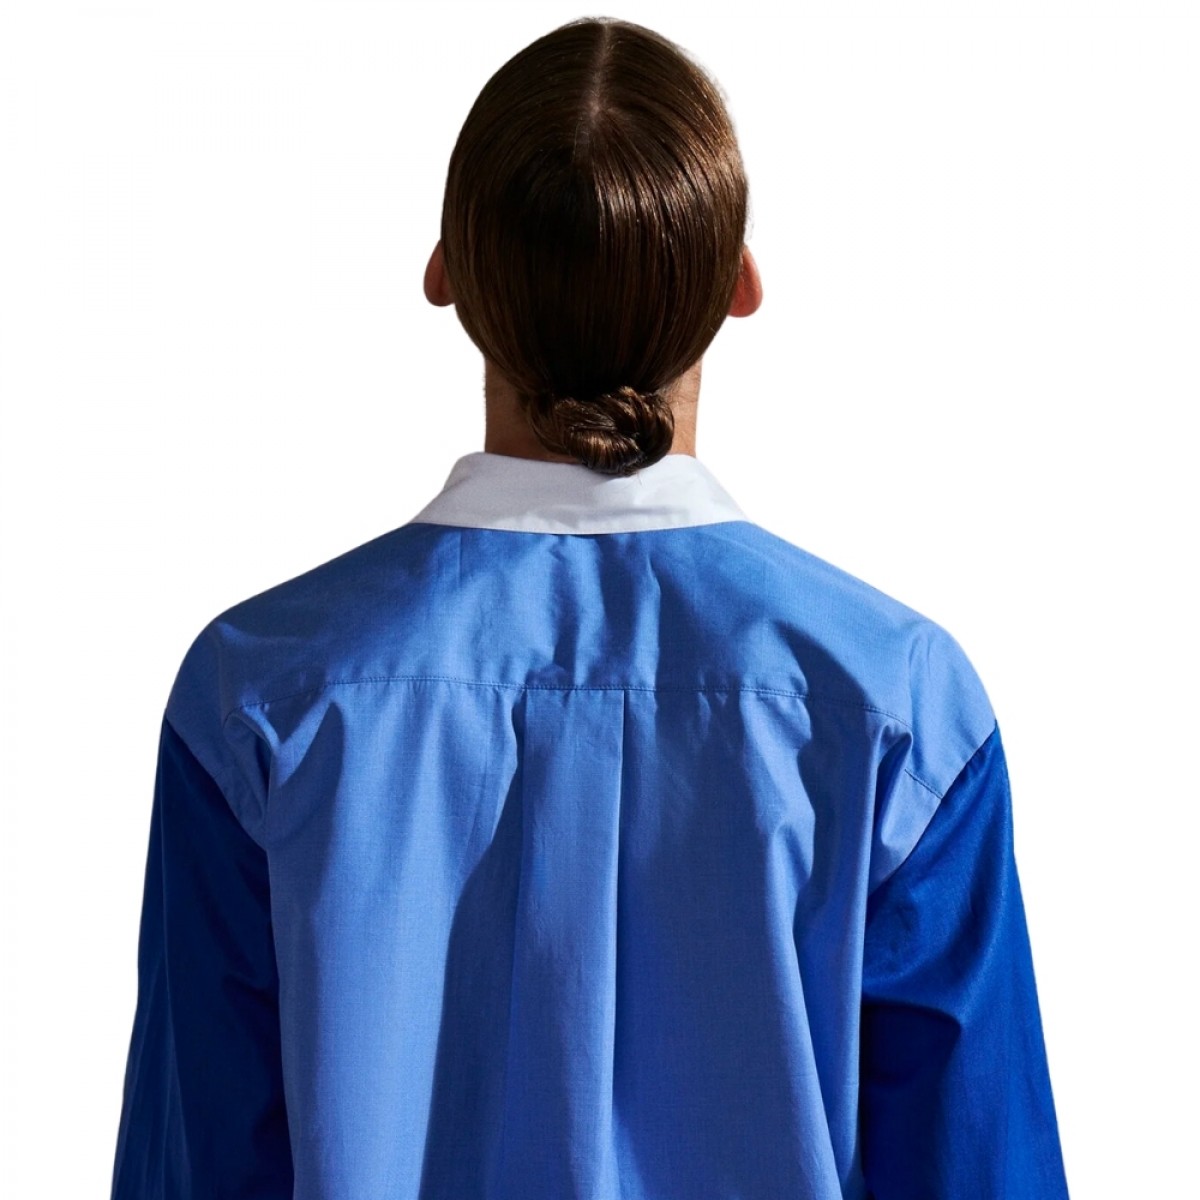 vega trio shirt - blue - model ryg